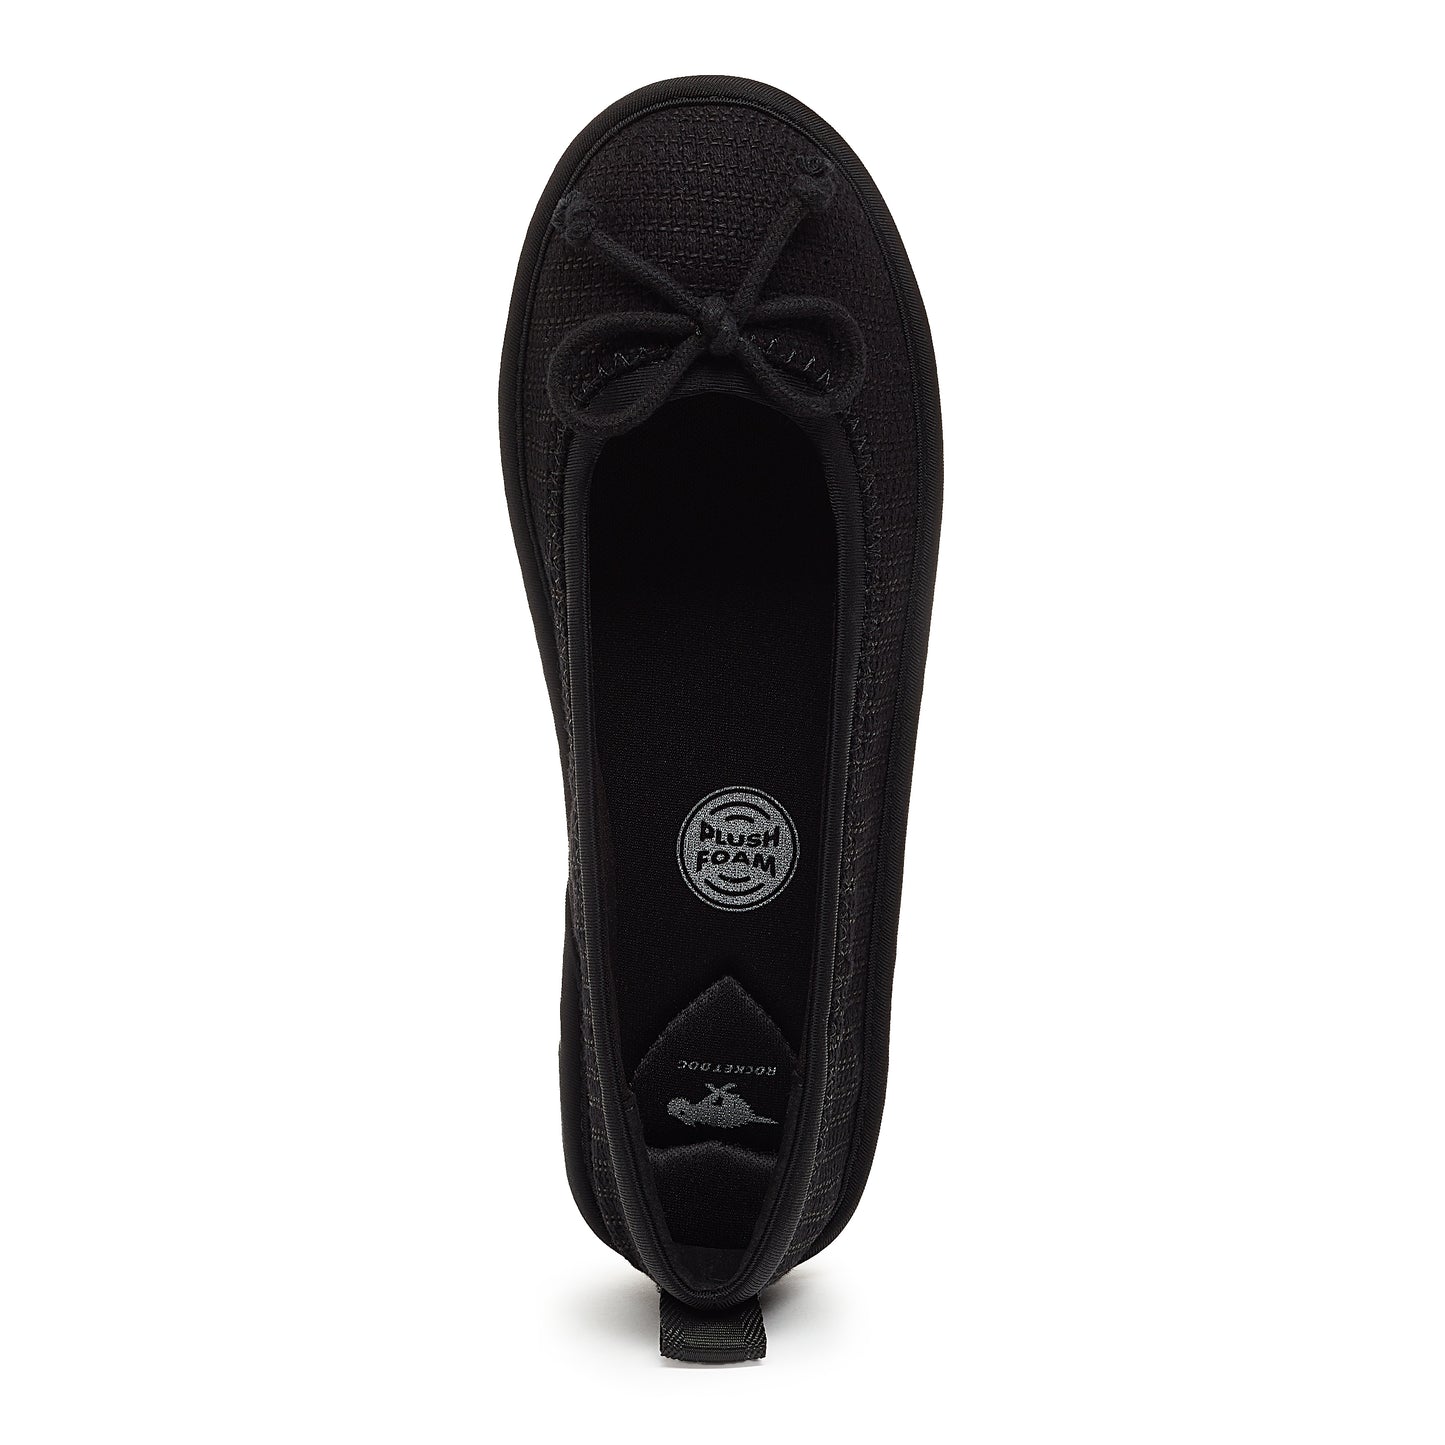 Radha Black Slip-On Casual Flat Shoes